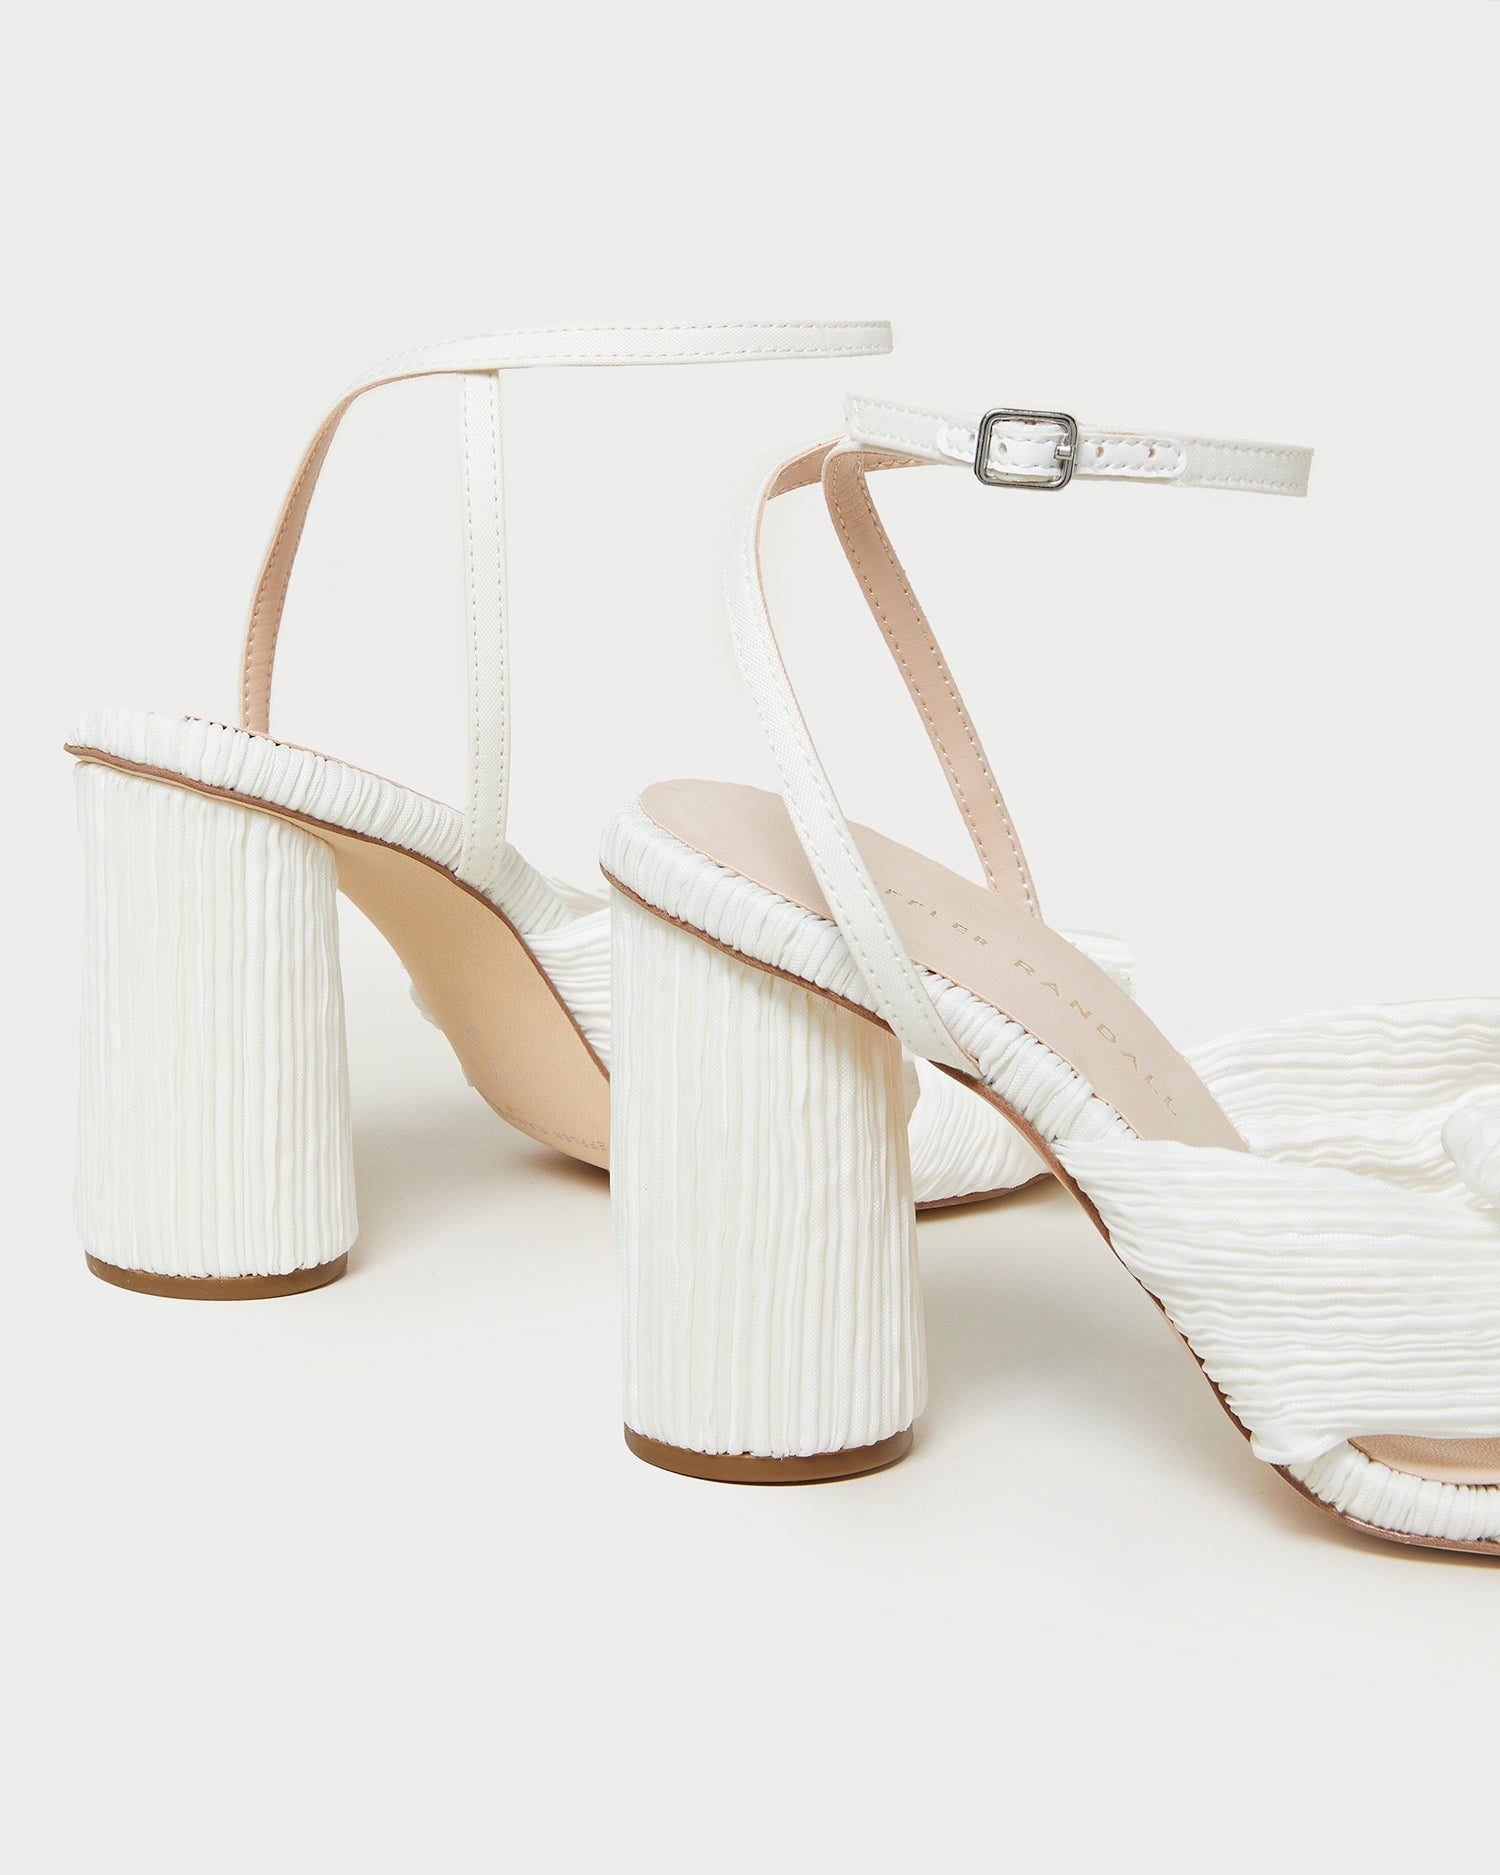 su.cheny 3” 4” heels white ivory silk lace Closed toe pumps Wedding Bridal  shoes | eBay